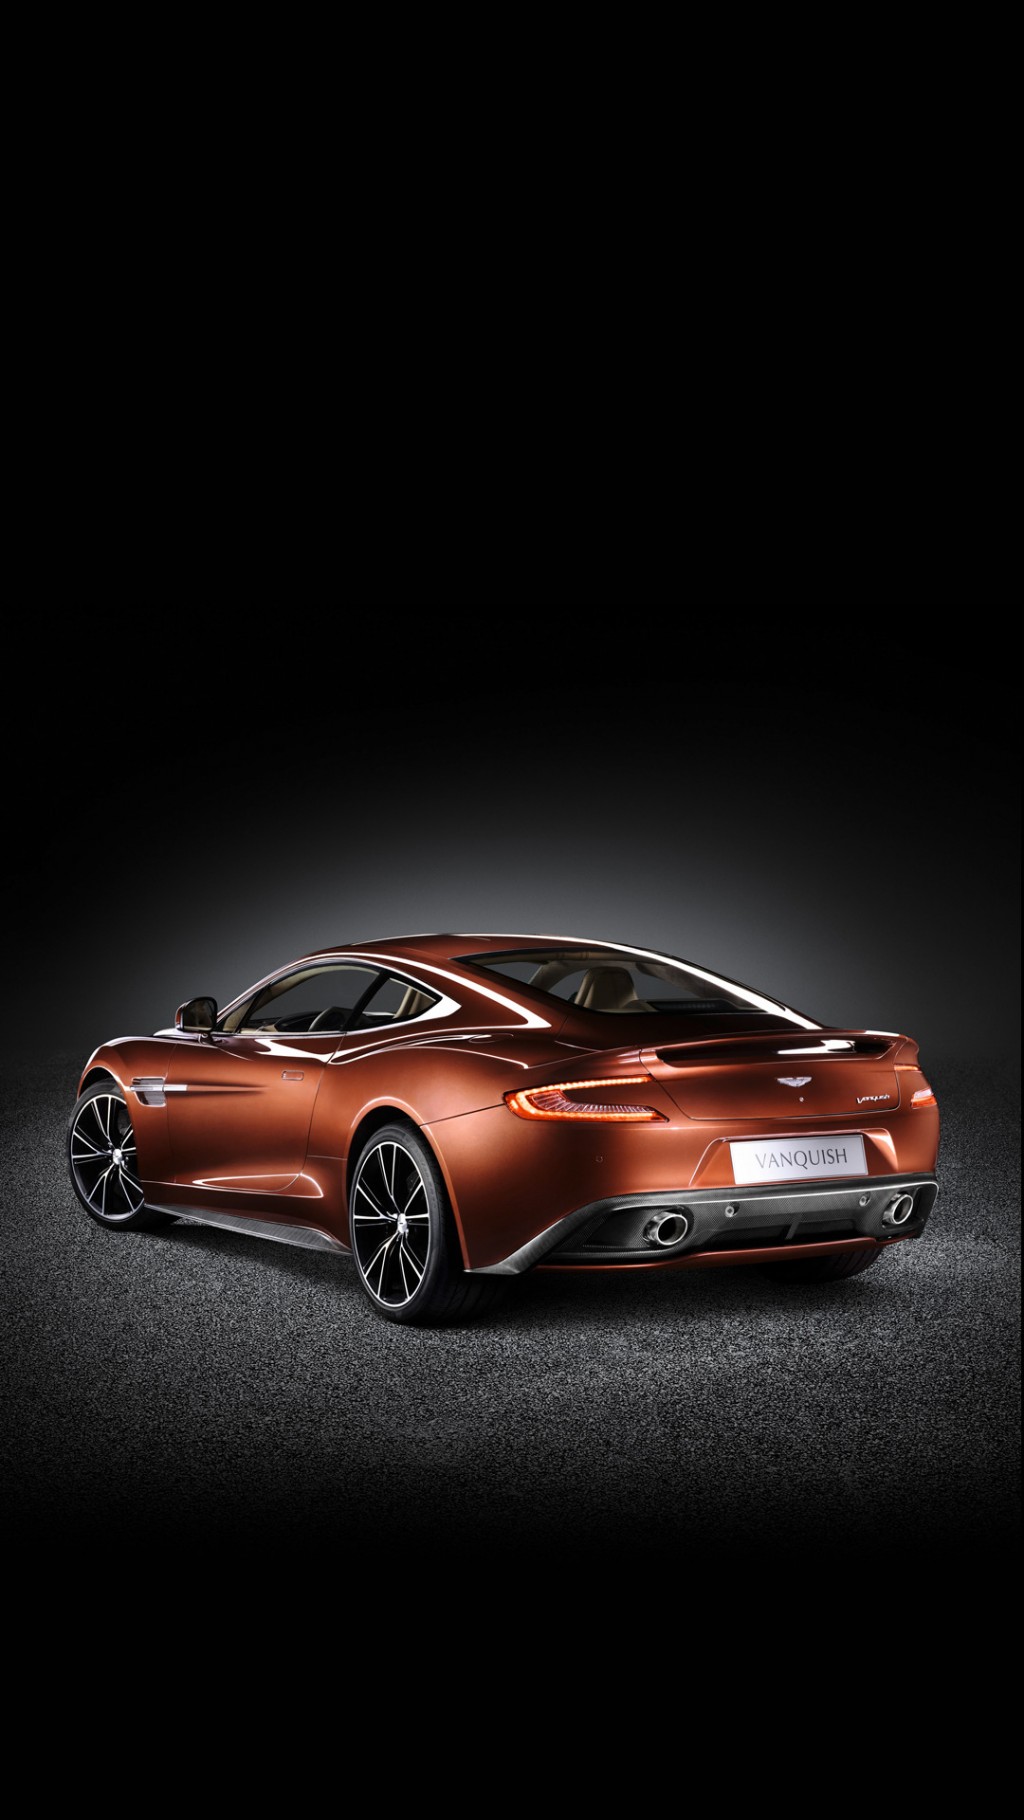 Car Iphone 6 Plus Wallpapers Aston Martin Vanquish photos of Best